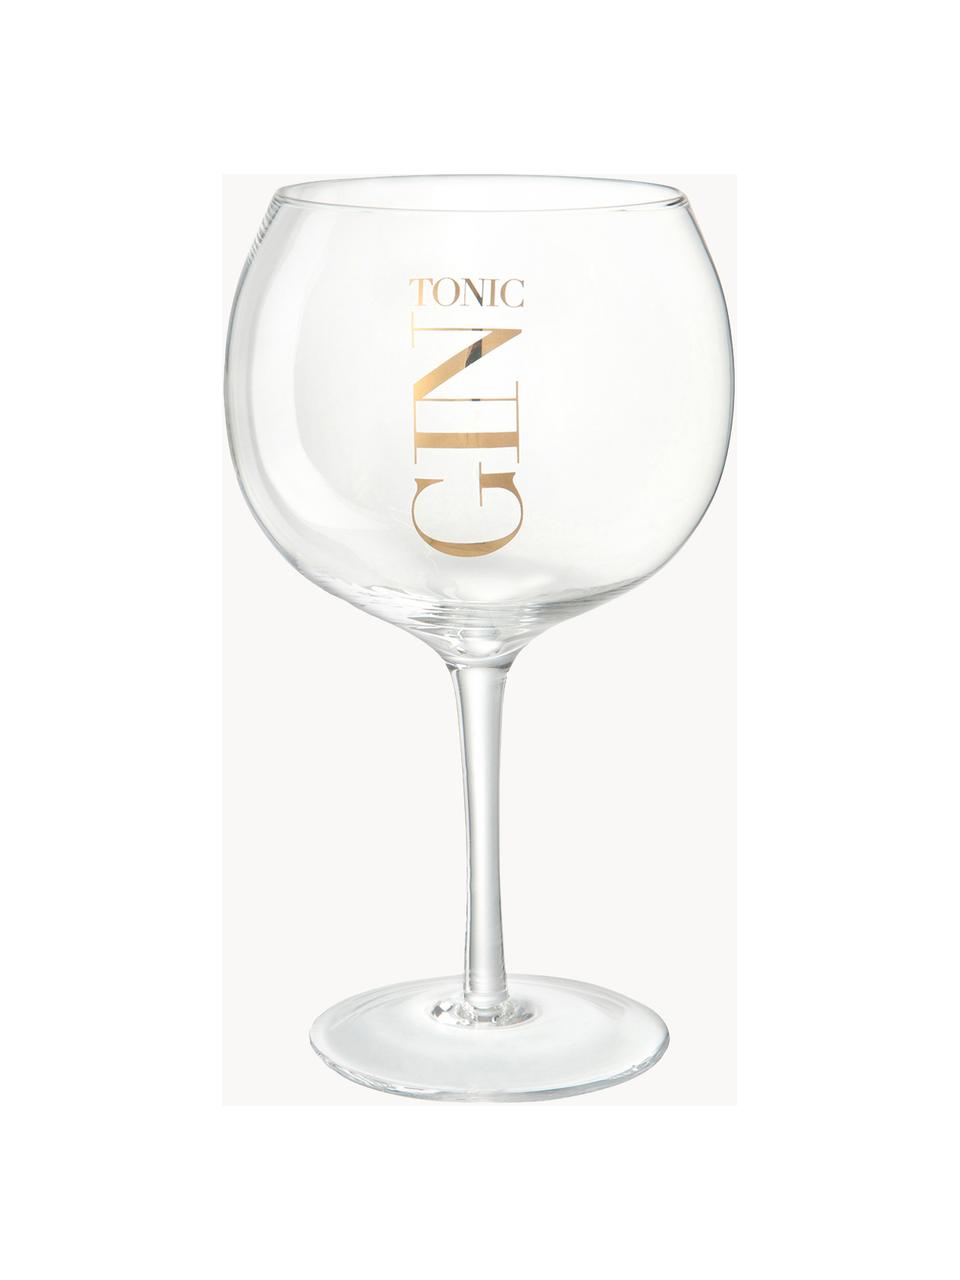 Gin Tonic Gläser mit Aufschrift, 4 Stück